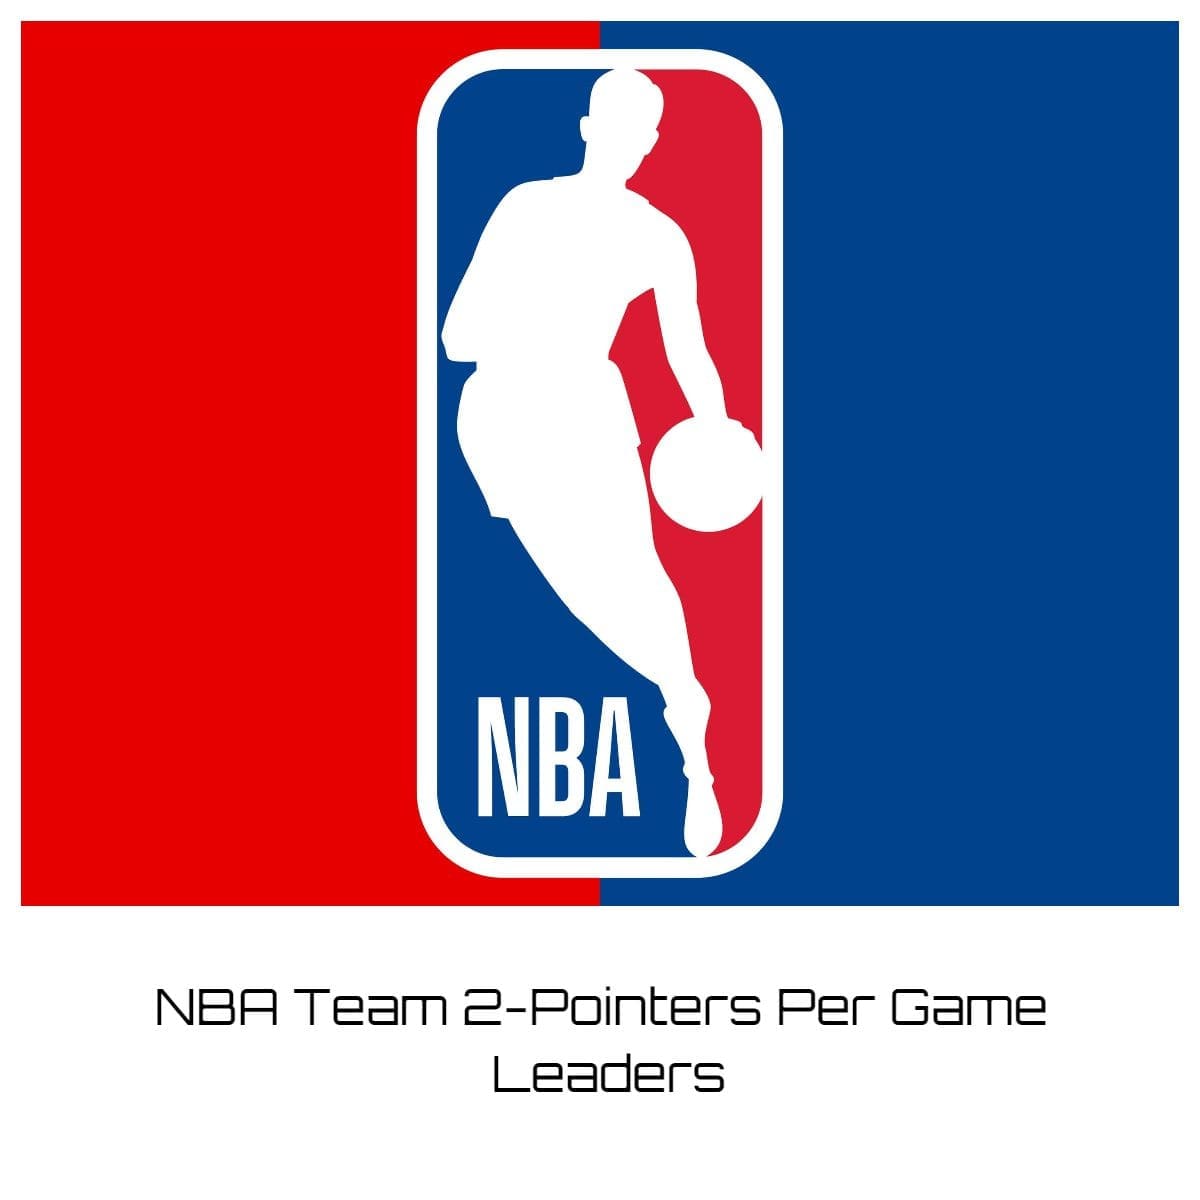 NBA Team 2-Pointers Per Game Leaders